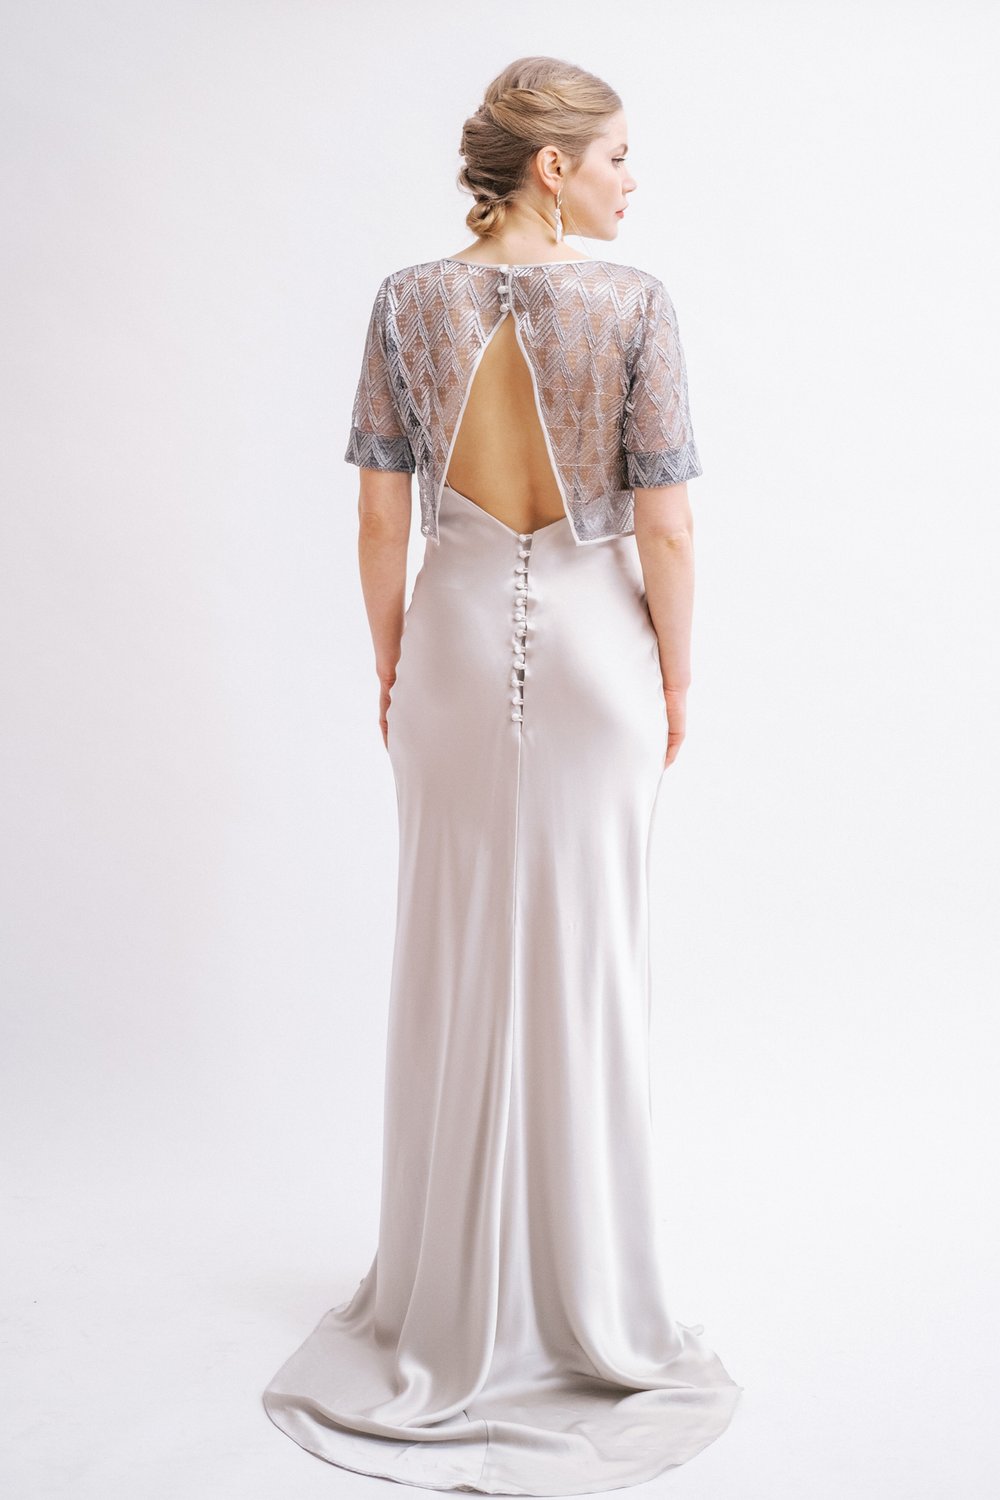 Cosmos silver slip dress silk wedding gown Kate Beaumont Sheffield 11.jpg